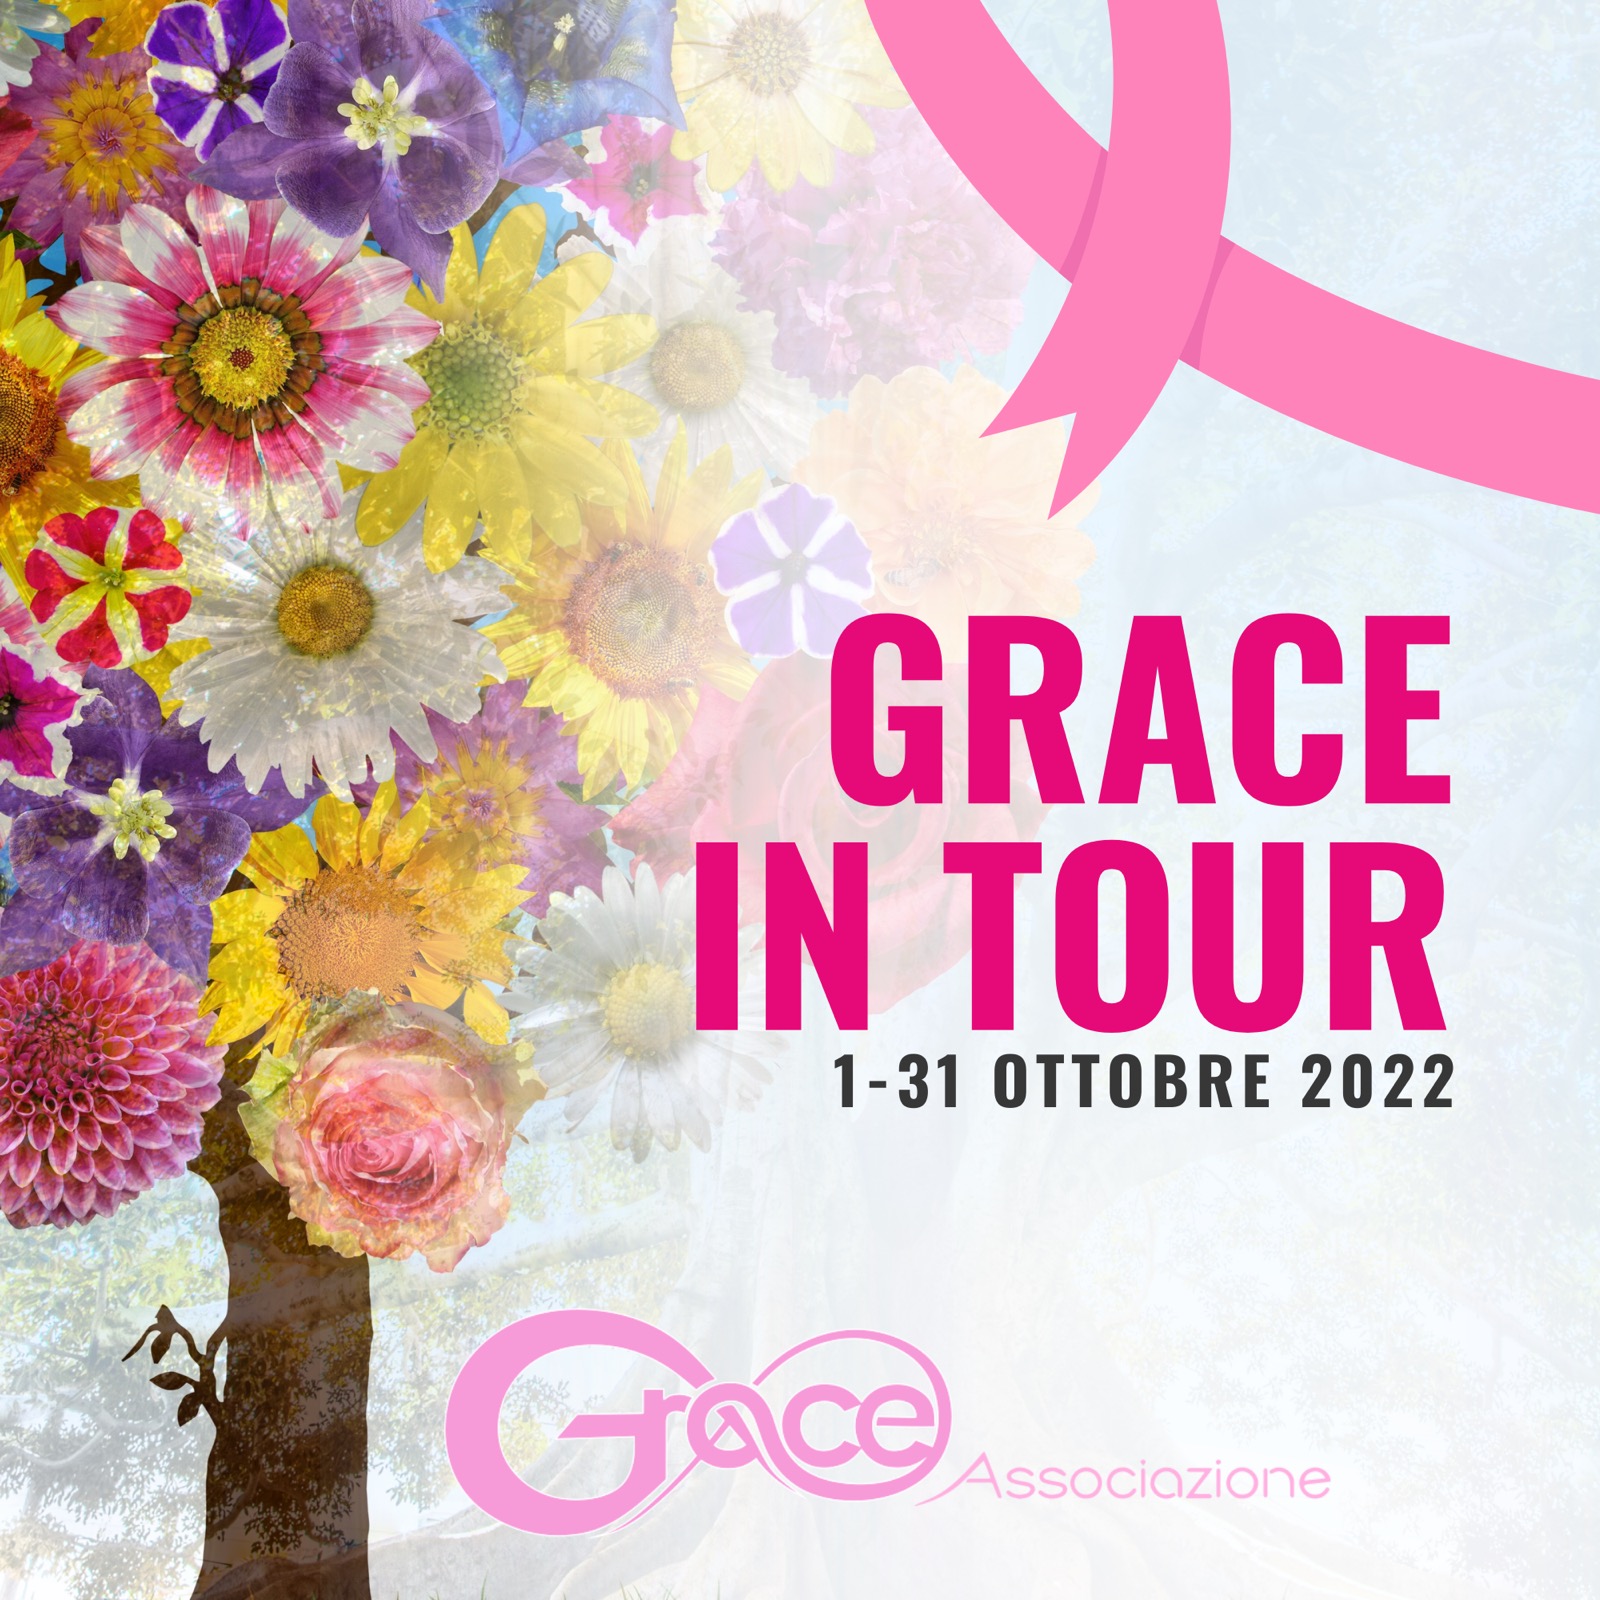 Grace in tour